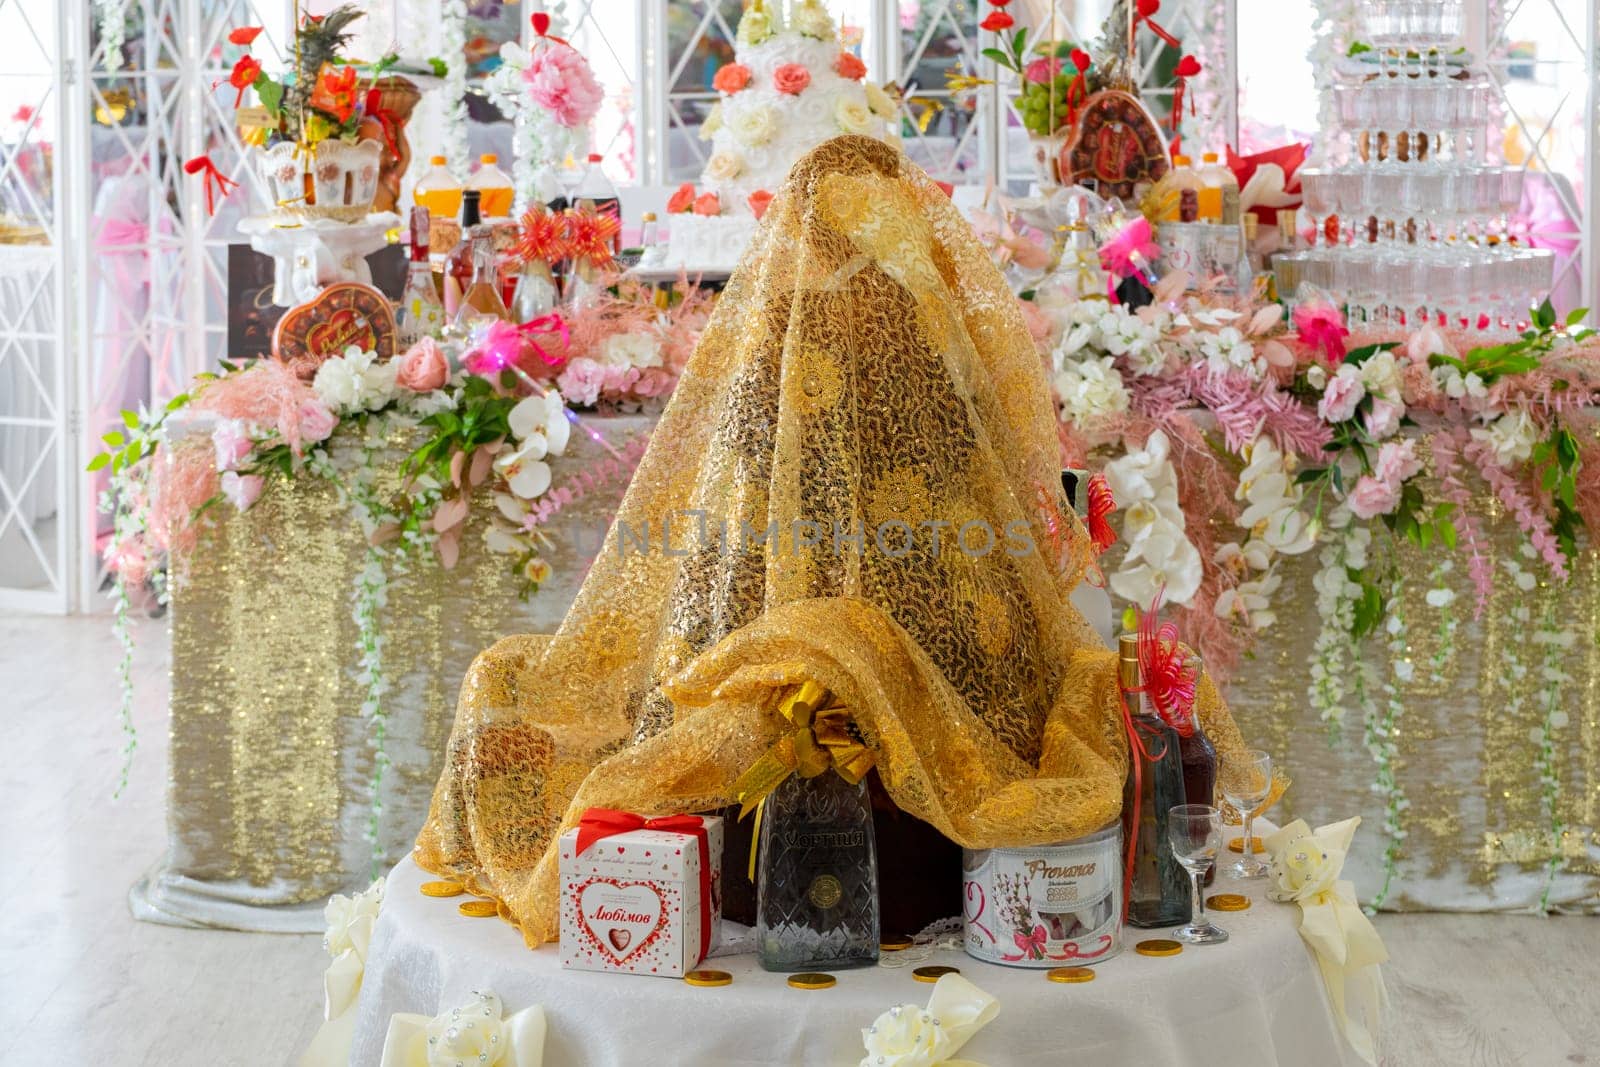 Traditional gifts at a gypsy wedding in Ukraine by Serhii_Voroshchuk